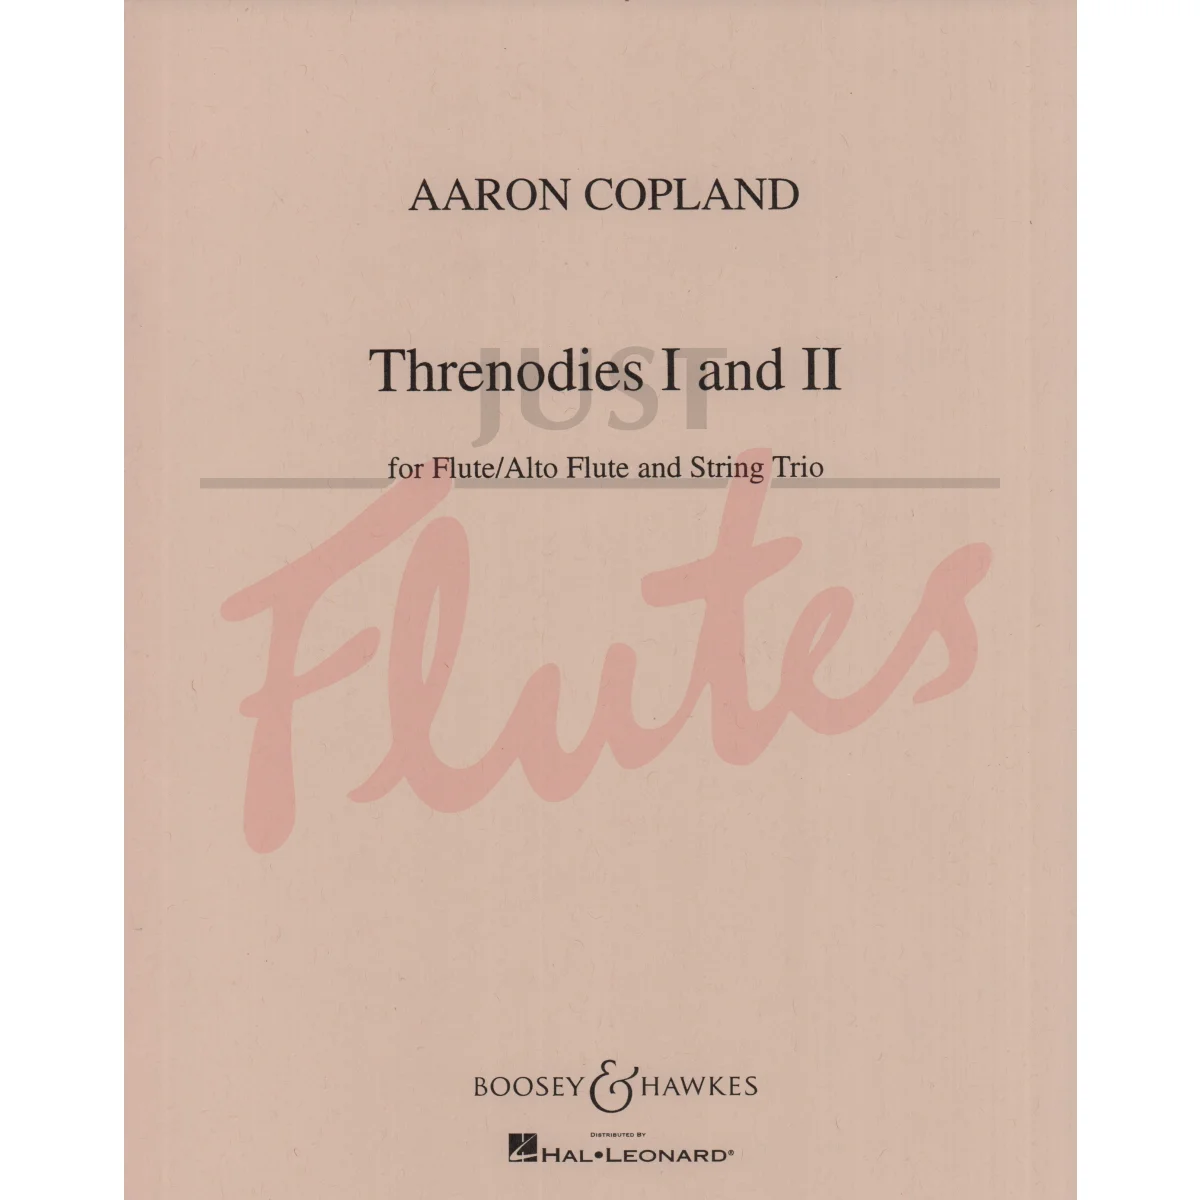 Threnodies I and II for Flute/Alto Flute and String Trio